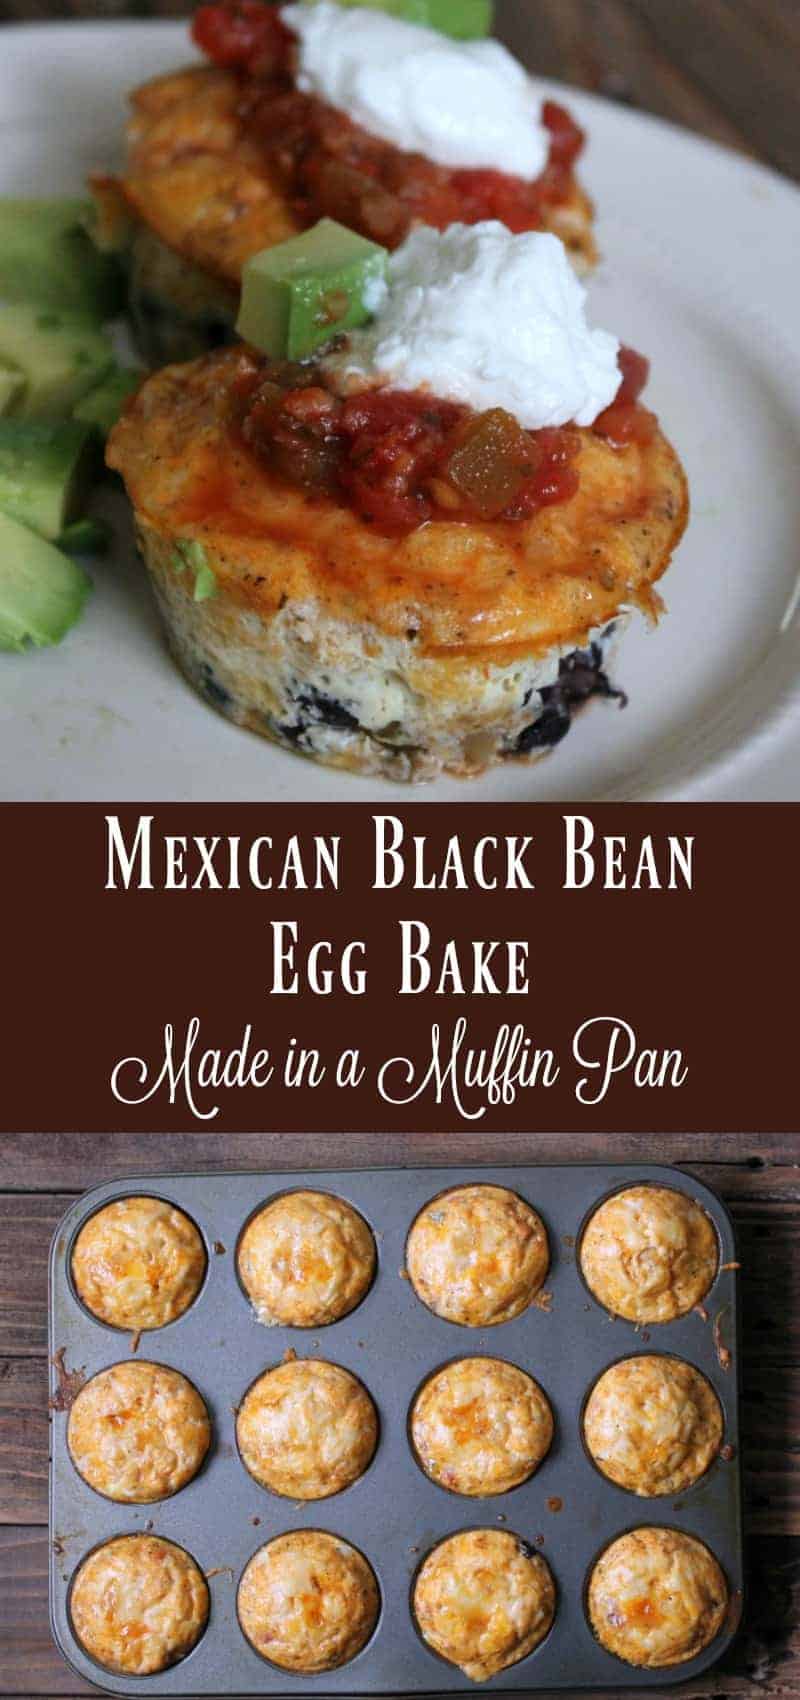 Mexican Black Bean Egg Bake make in a muffin tin. Healthy breakfast recipe